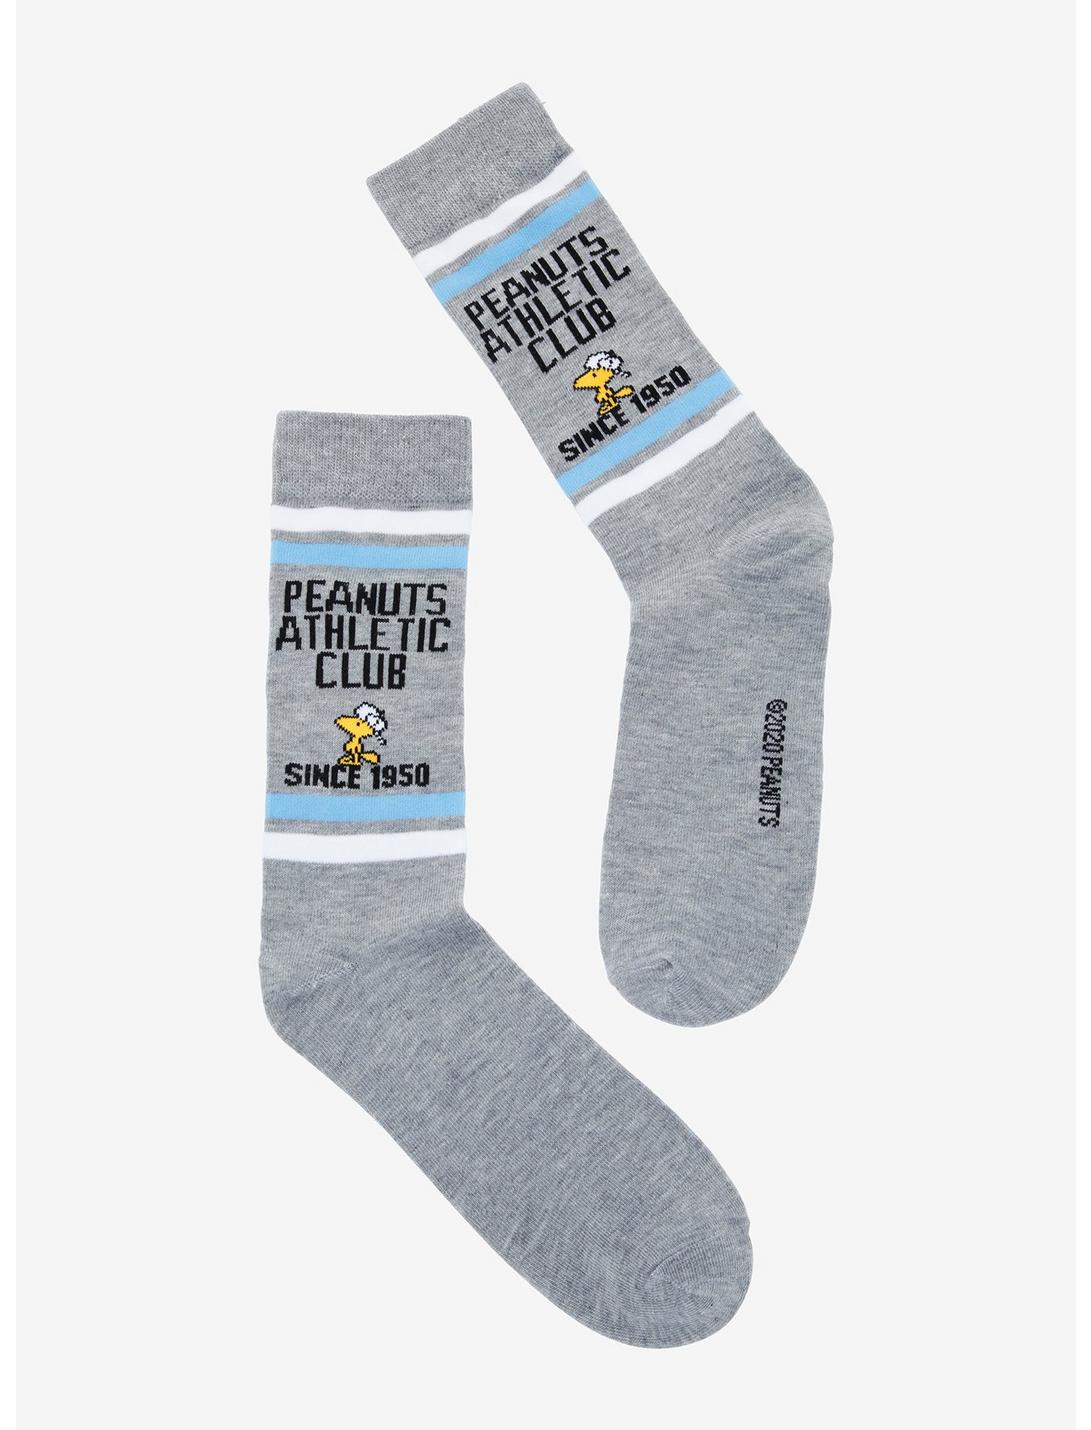 Peanuts Athletic Club Crew Socks, , hi-res